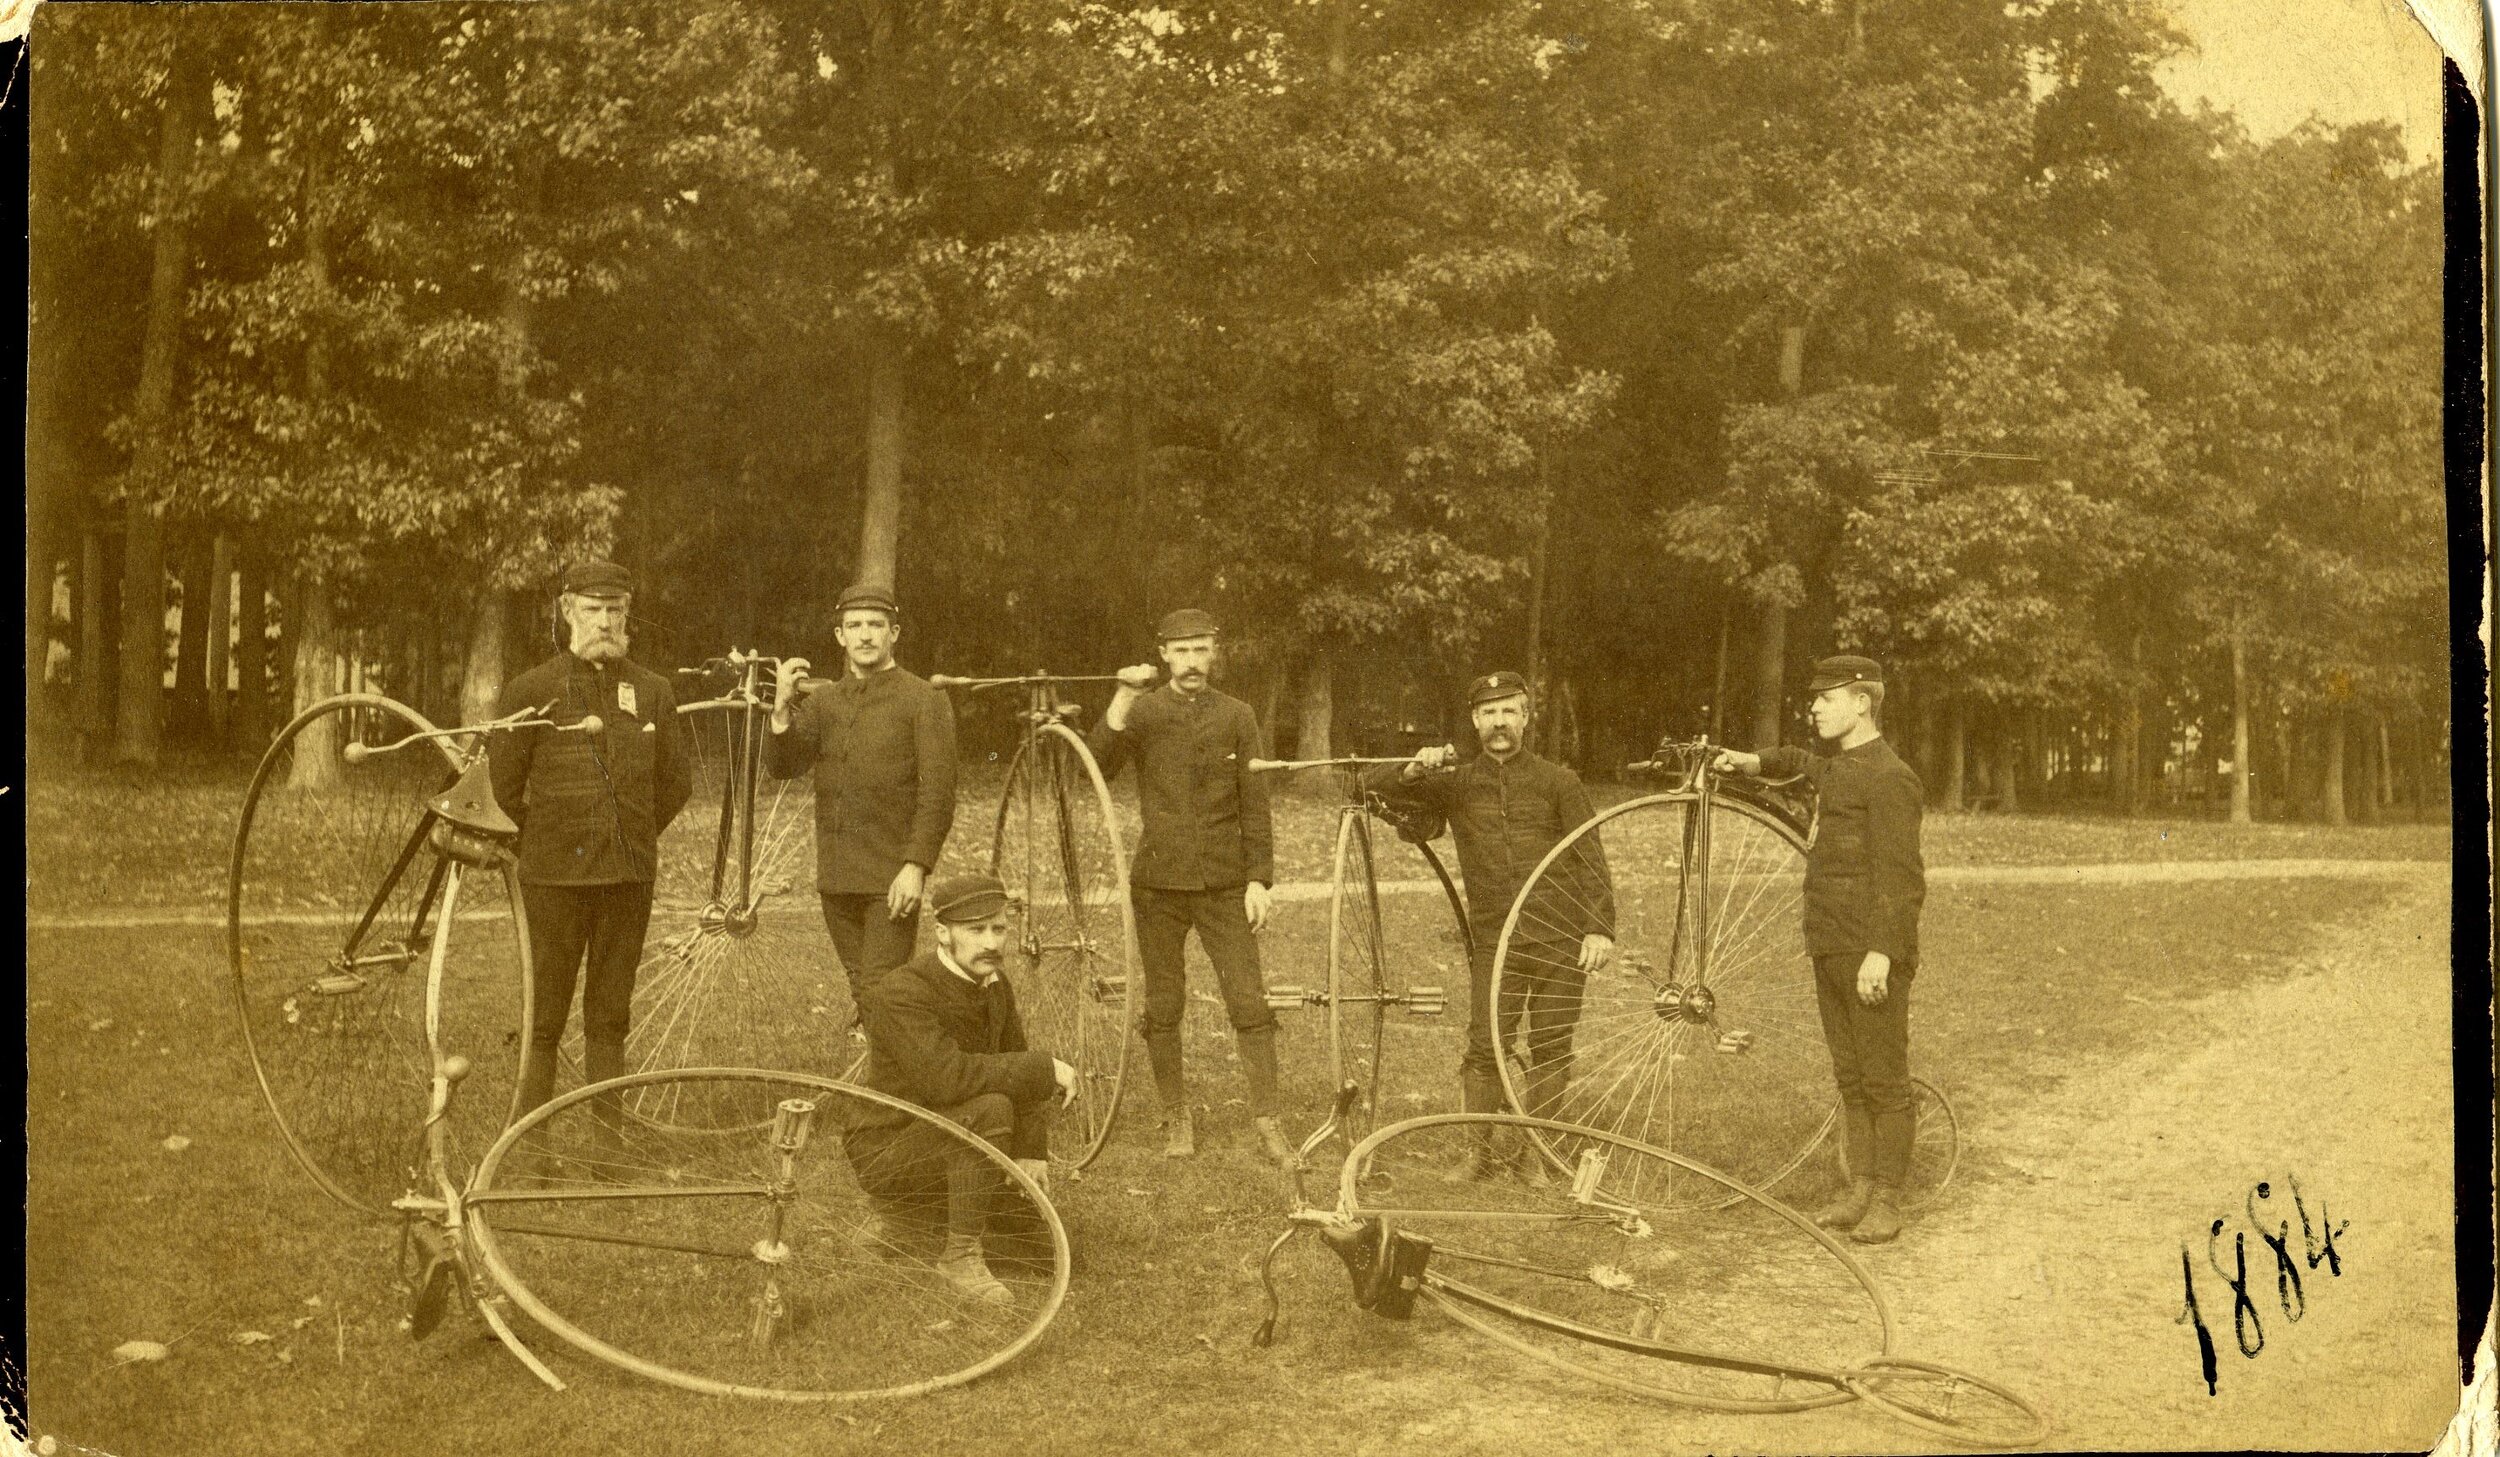 Wheelman Bike Club, Prospect Park